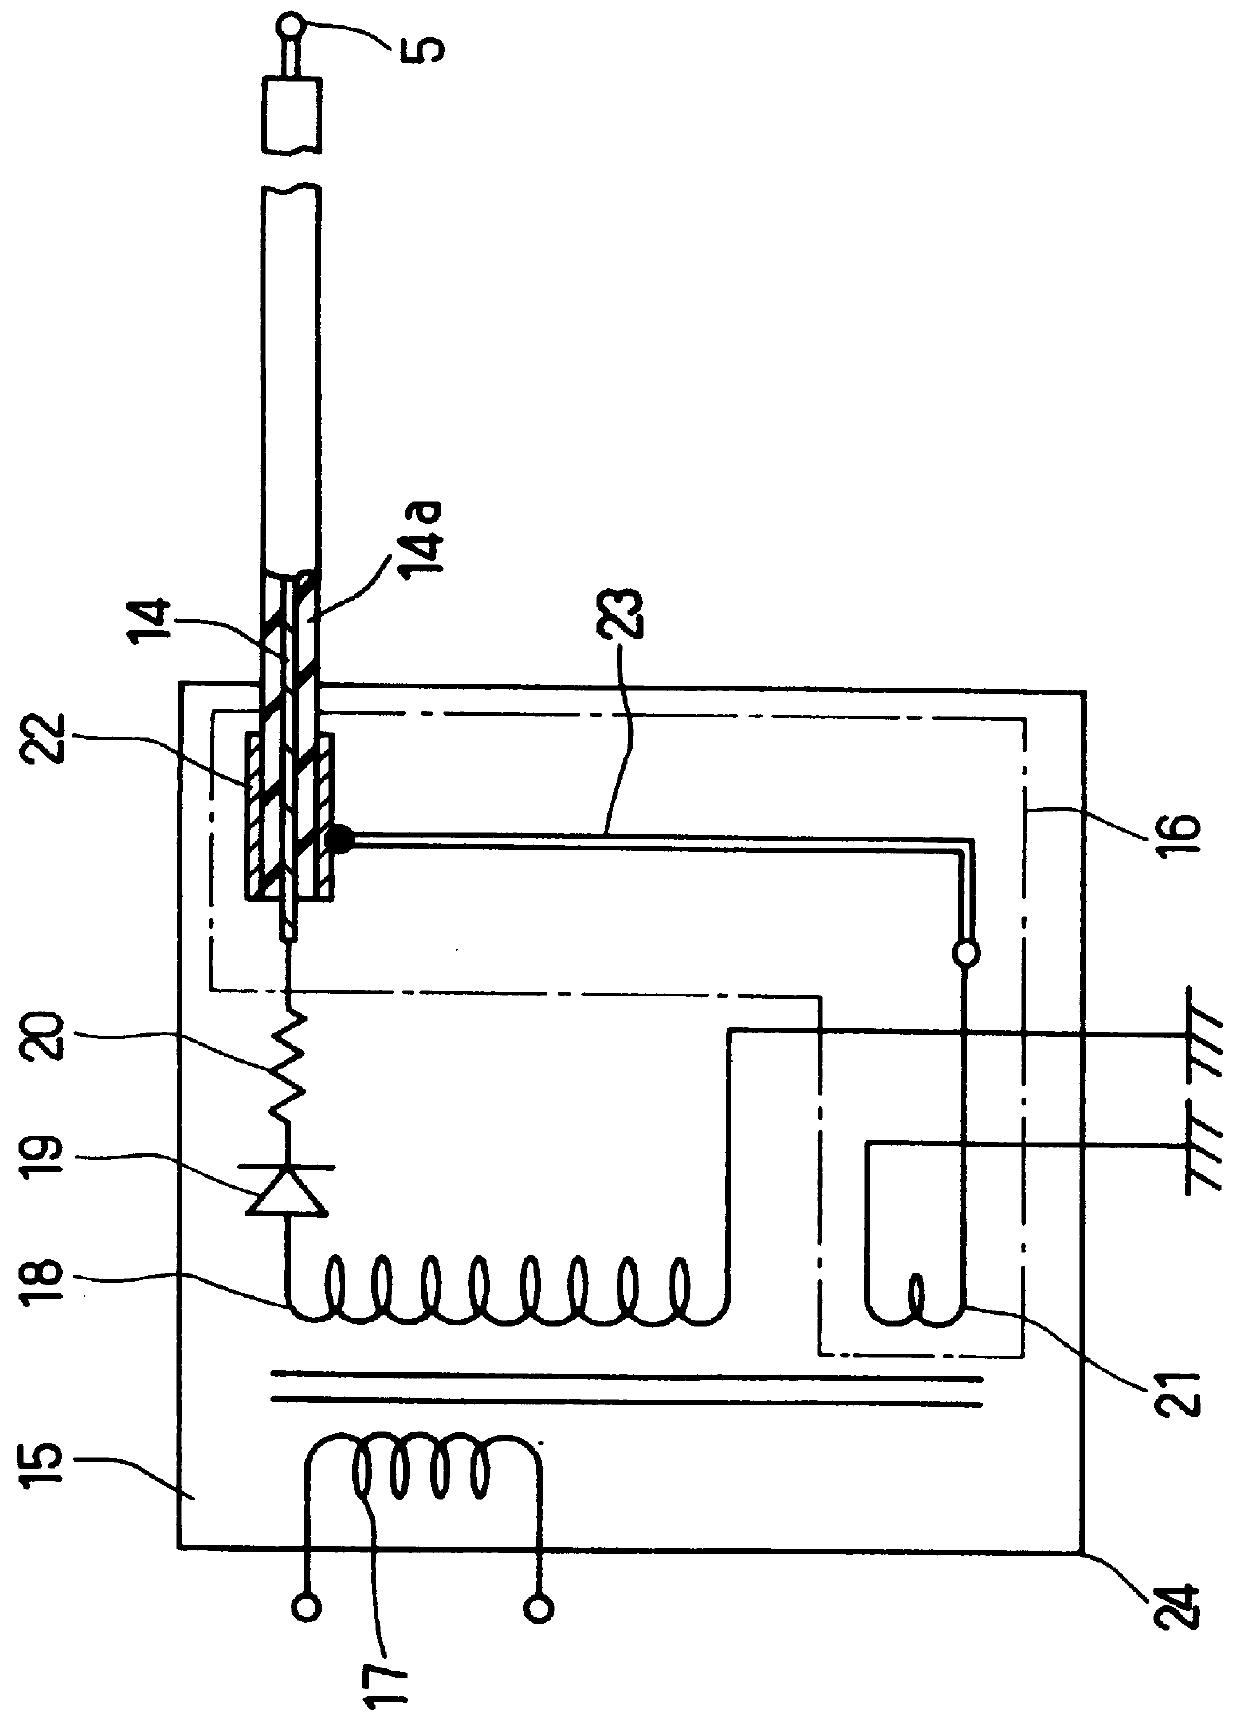 Cathode ray tube apparatus